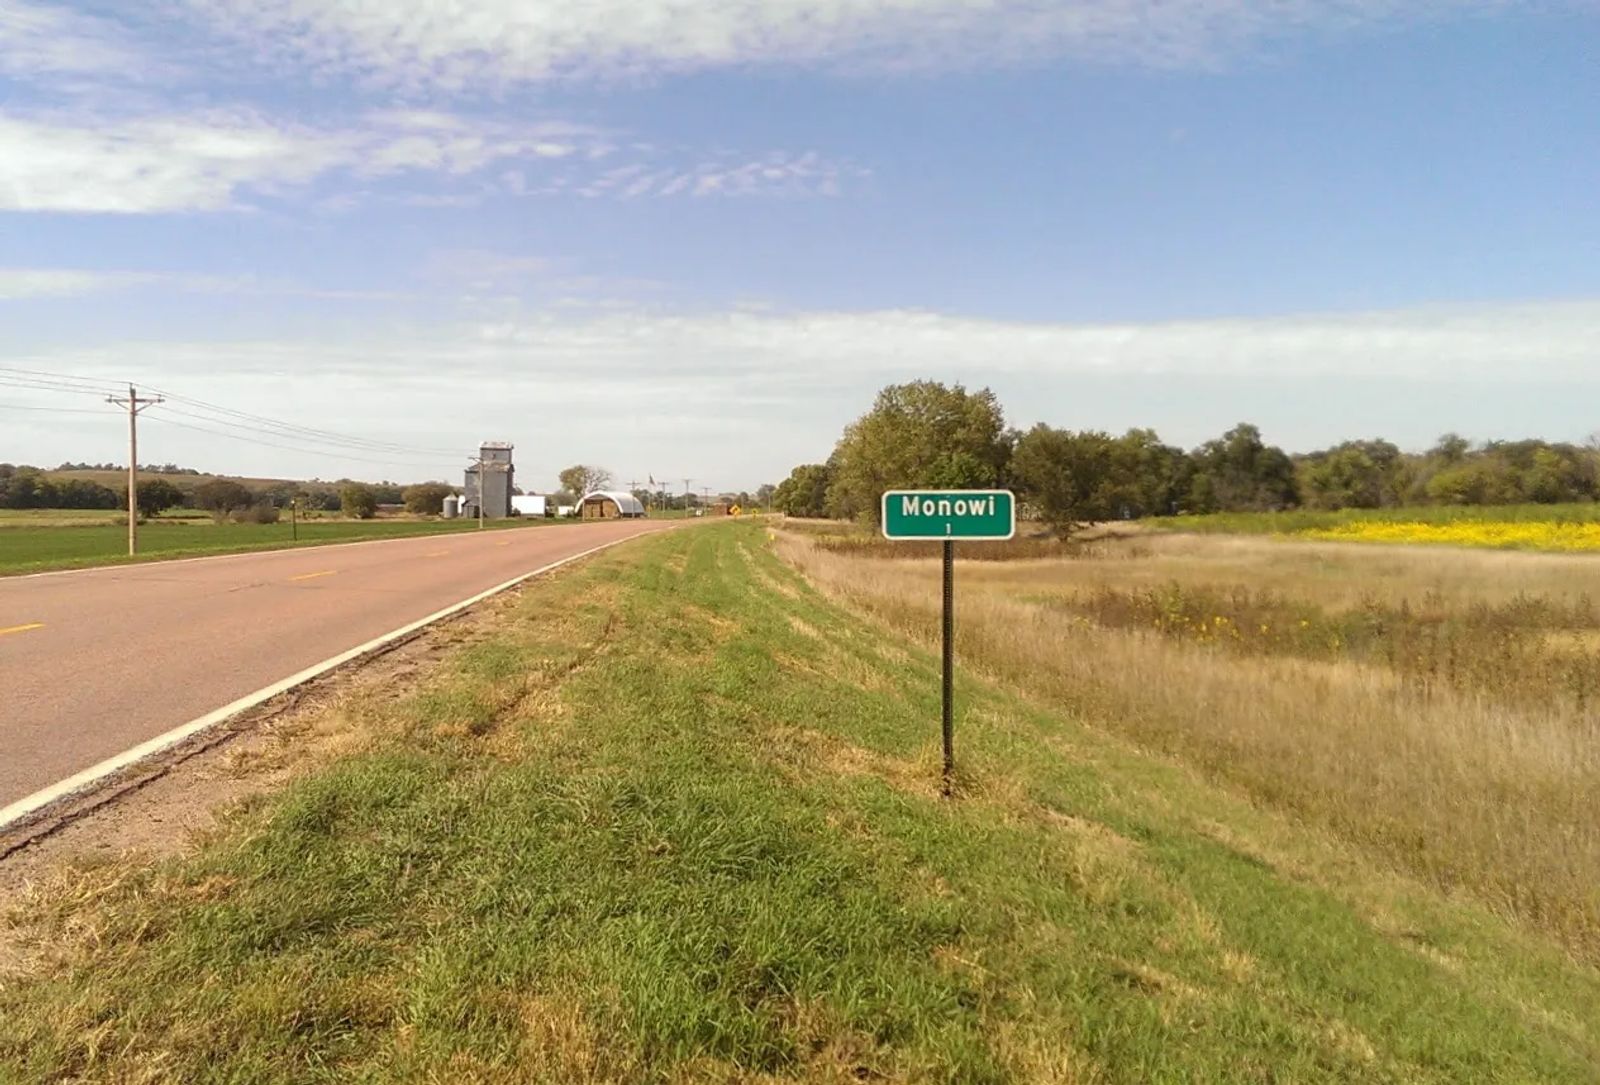 Photo of sign for Monowi, Nebraska, Population one